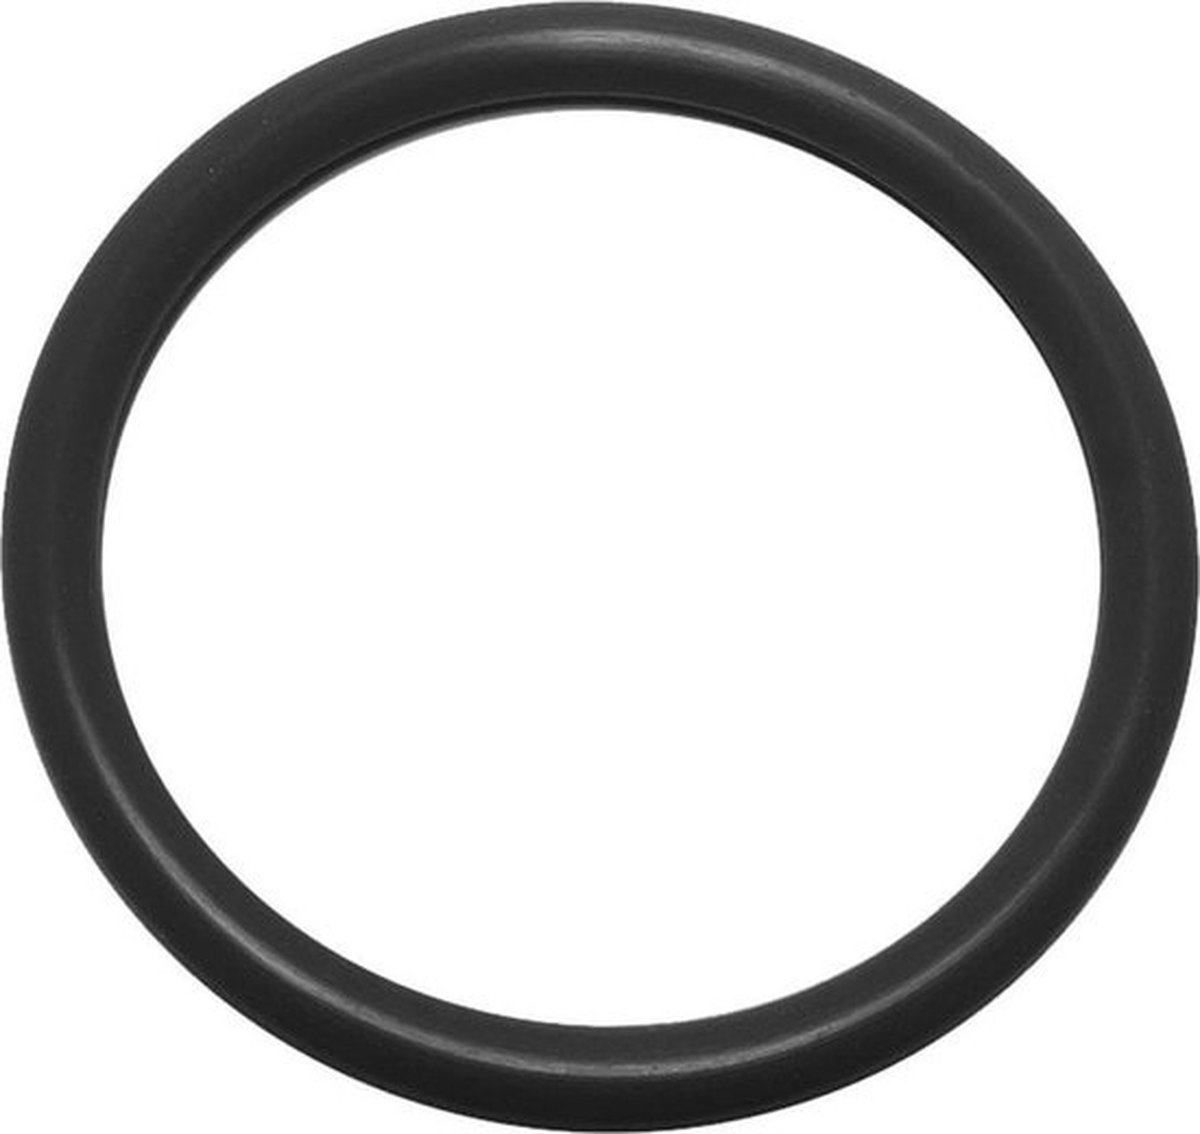 O ring kunststof - zwart - 42mm - 3 stuks - allesvoordeliger